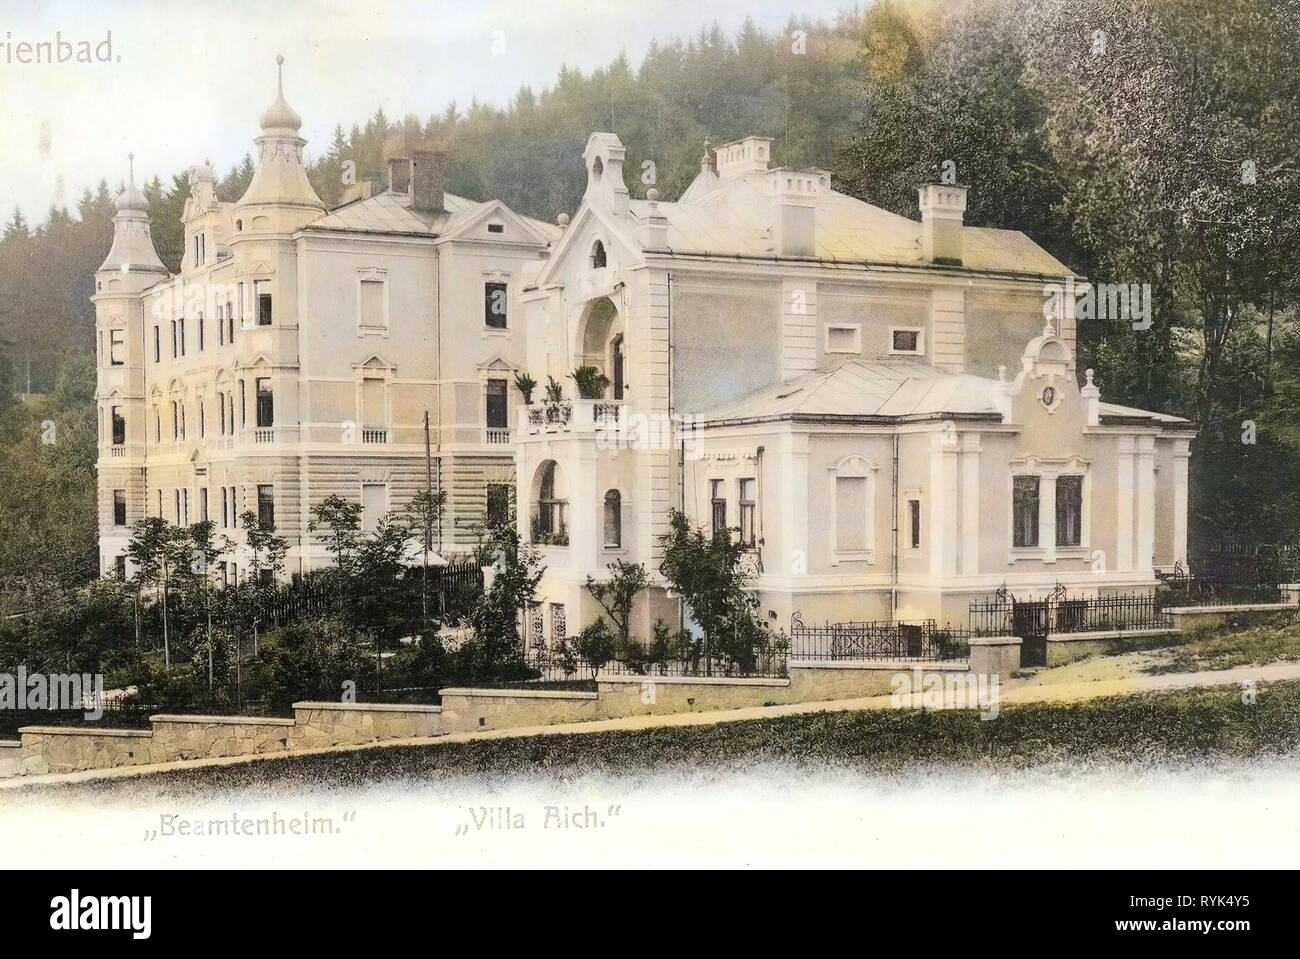 Villas in Mariánské Lázně, 1901, Karlovy Vary Region, Marienbad, Beamtenheim, Villa Aich, Czech Republic Stock Photo